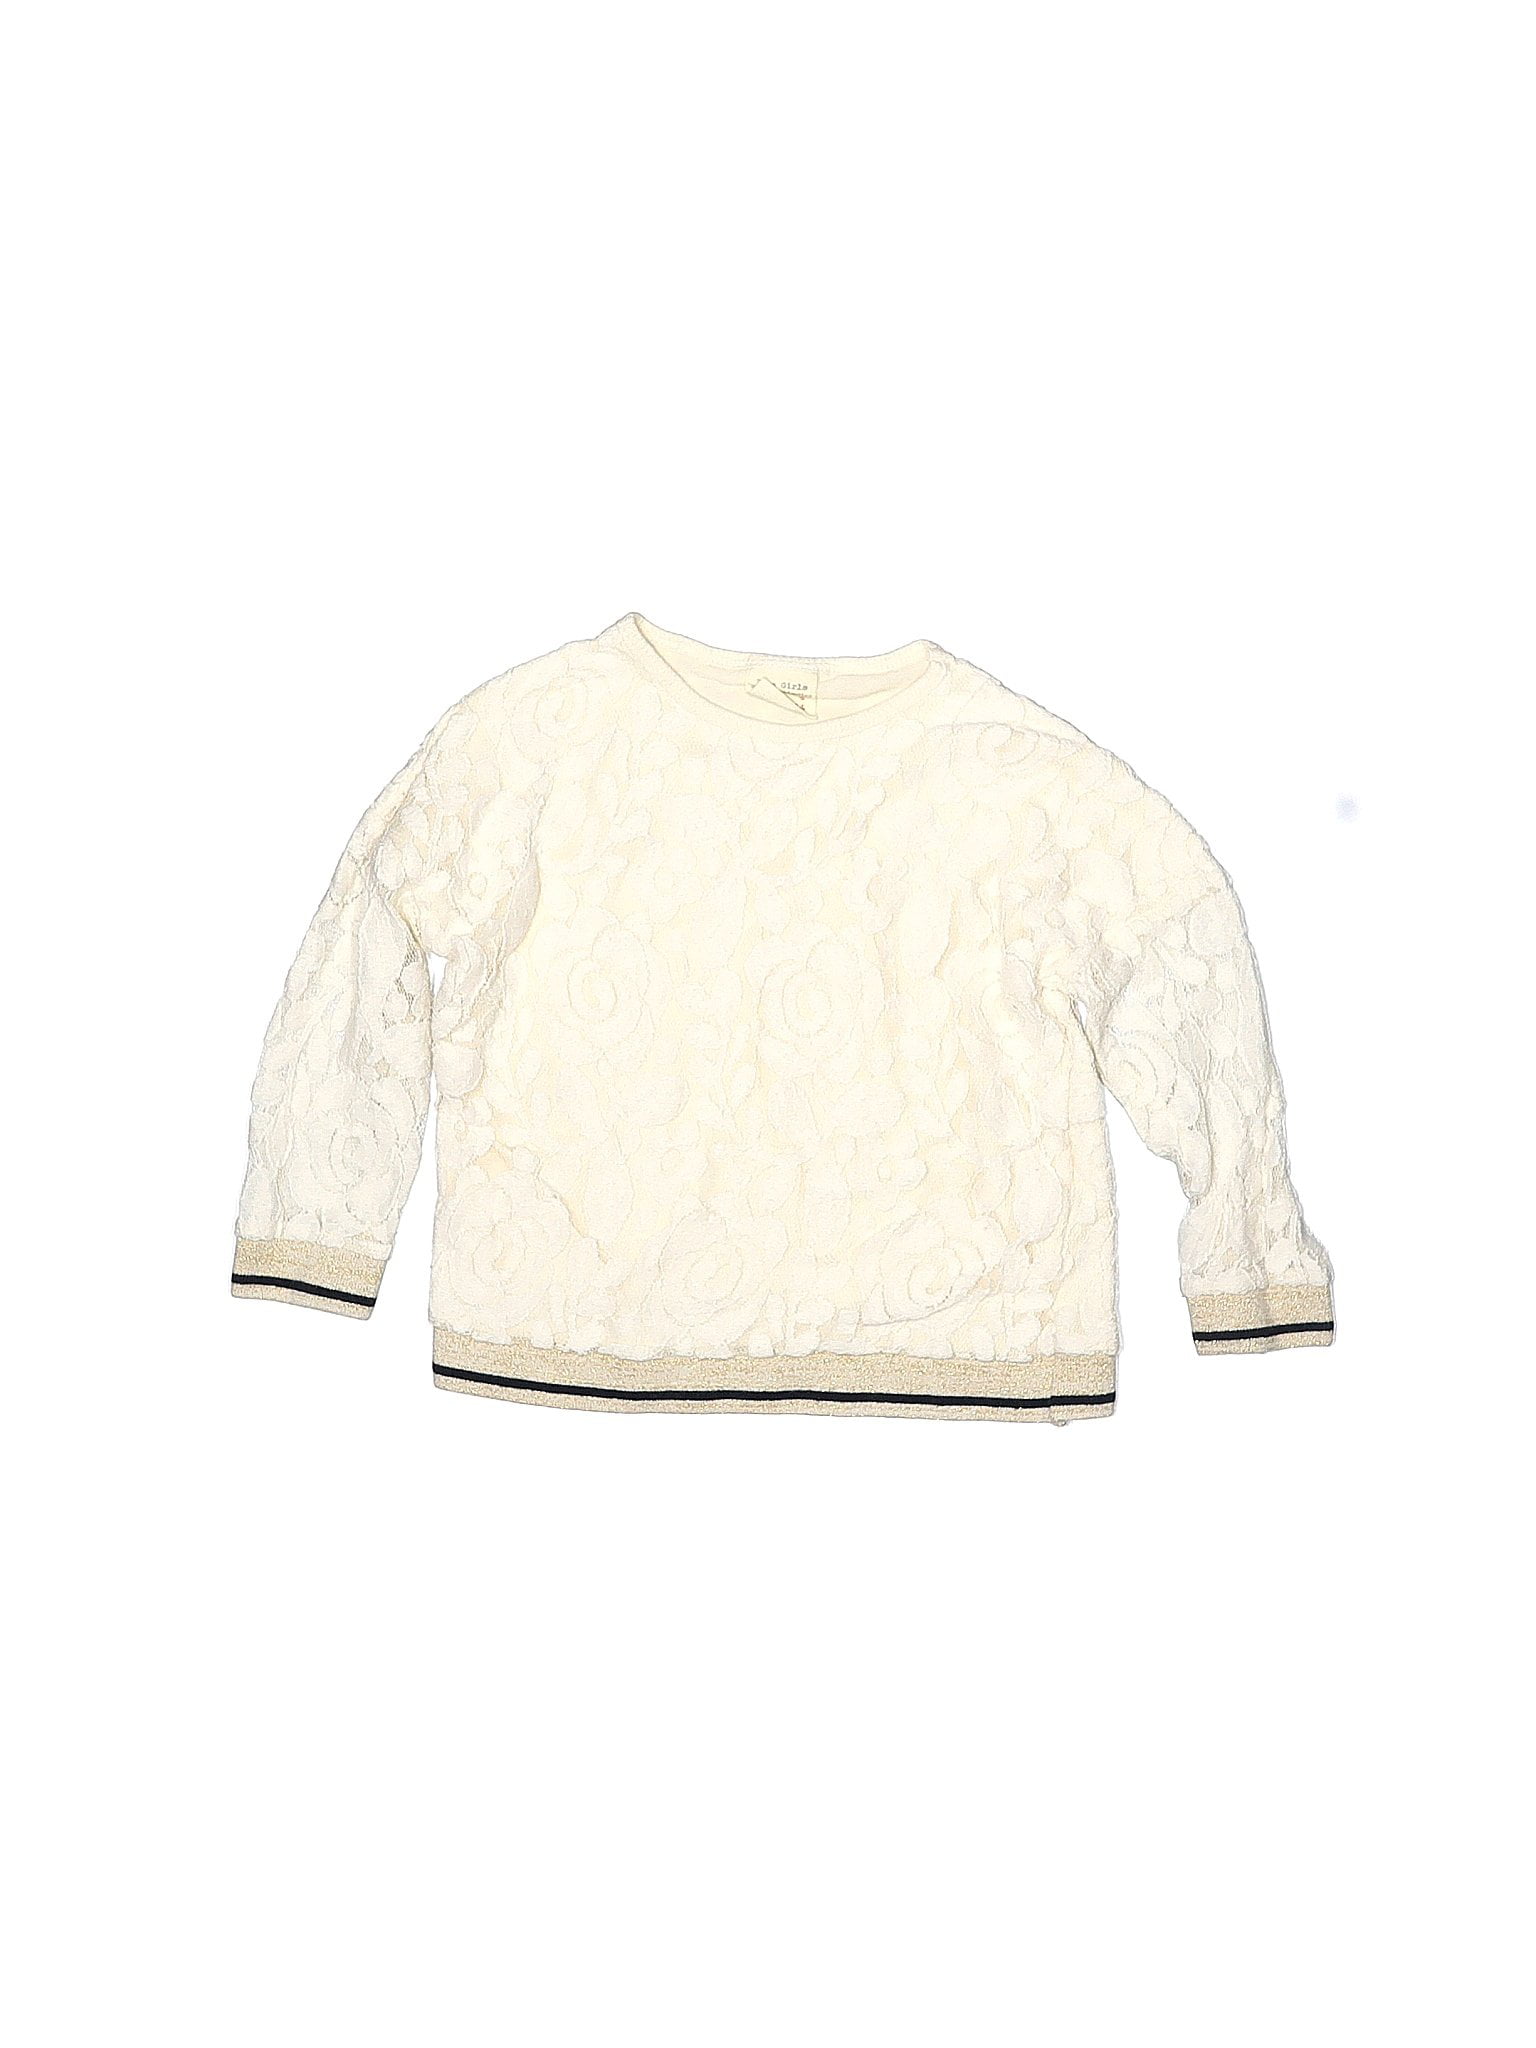 KIDS FASHION Jumpers & Sweatshirts NO STYLE Zara sweatshirt White discount 68% 